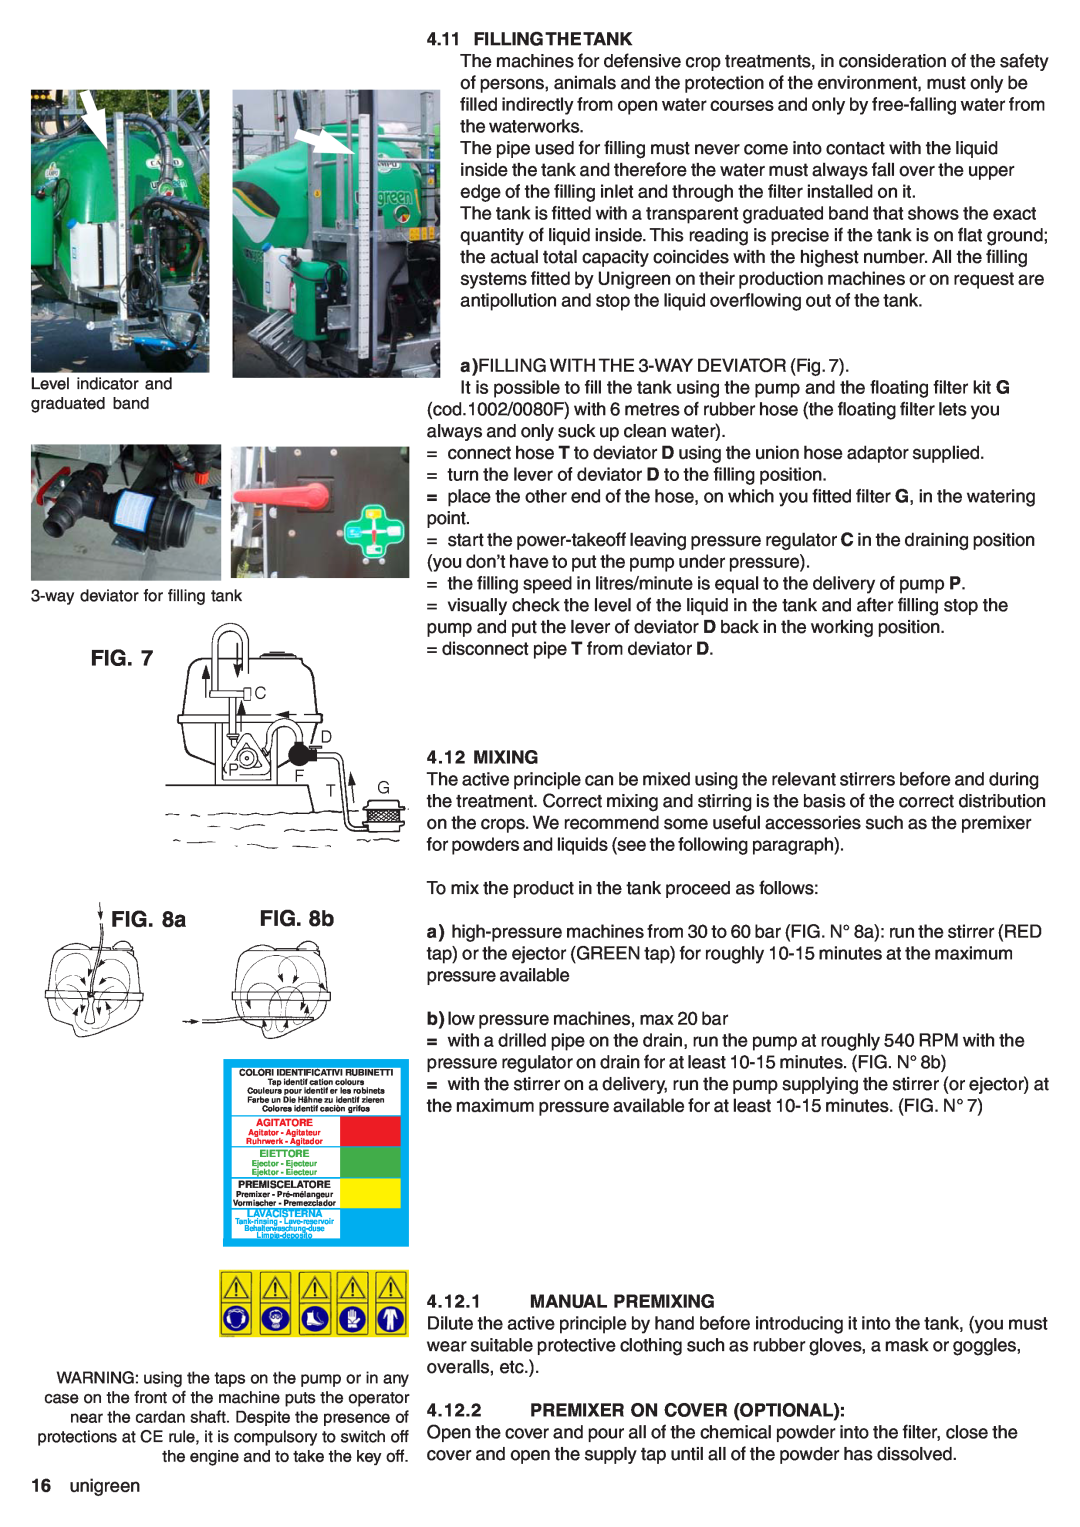 Unigreen DSP 11 - 16 - 22 - 32 manual b, Filling The Tank, Mixing, Manual Premixing, Premixer On Cover Optional 